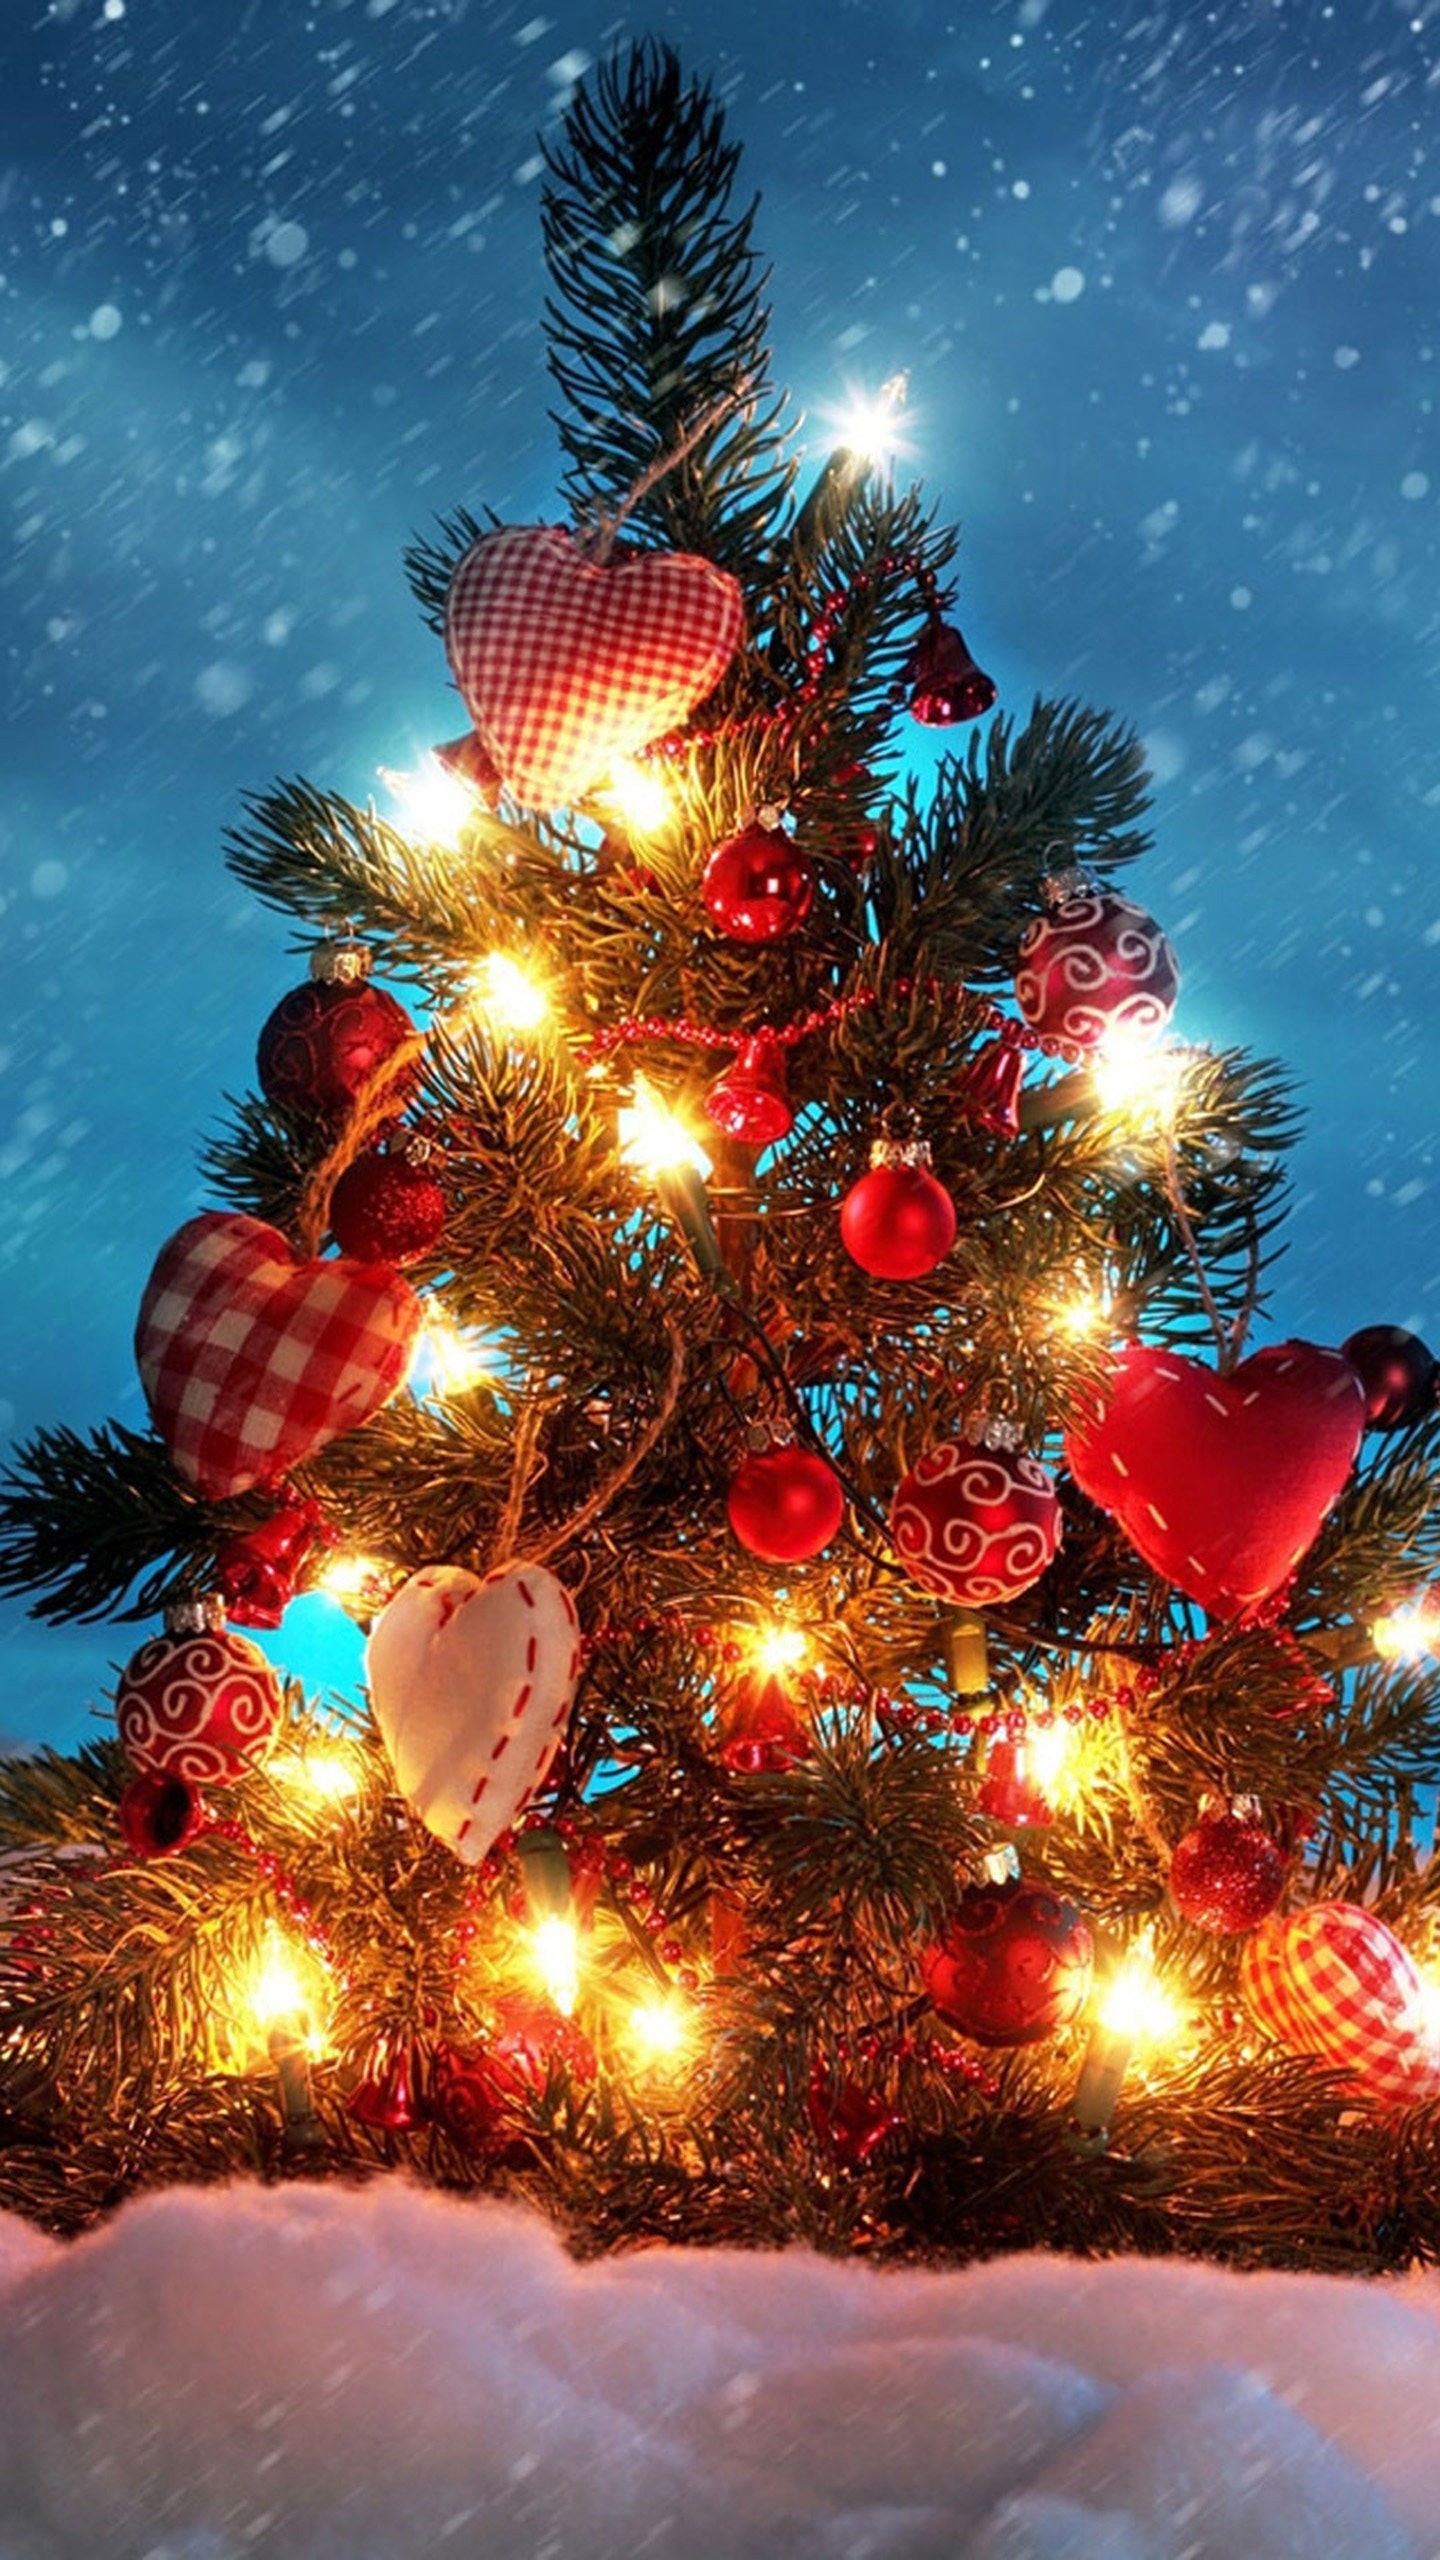 1440x2560 2014 Christmas tree iPhone 6 plus wallpaper - hearts, bells